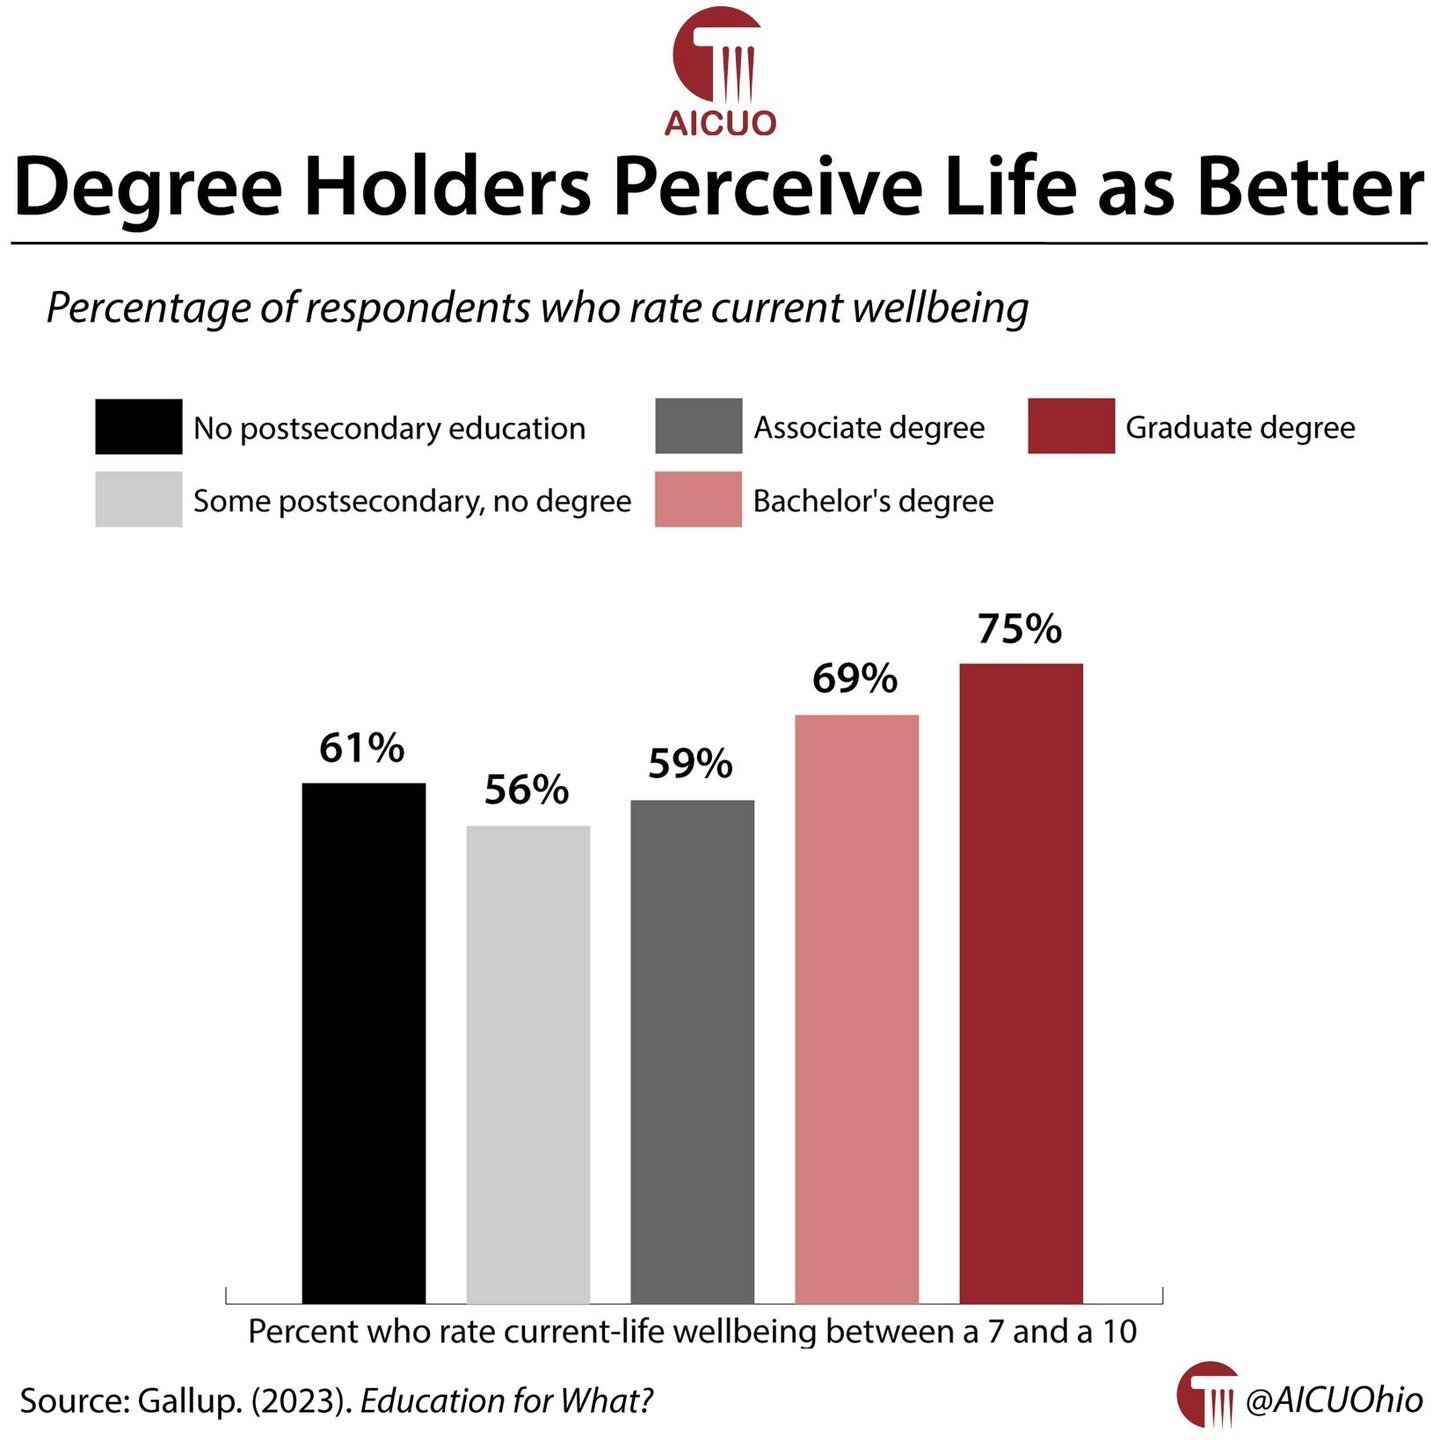 Degree holders perceive life as better 
.
.
.
.
#GraphoftheWeek #GotW #HigherEd